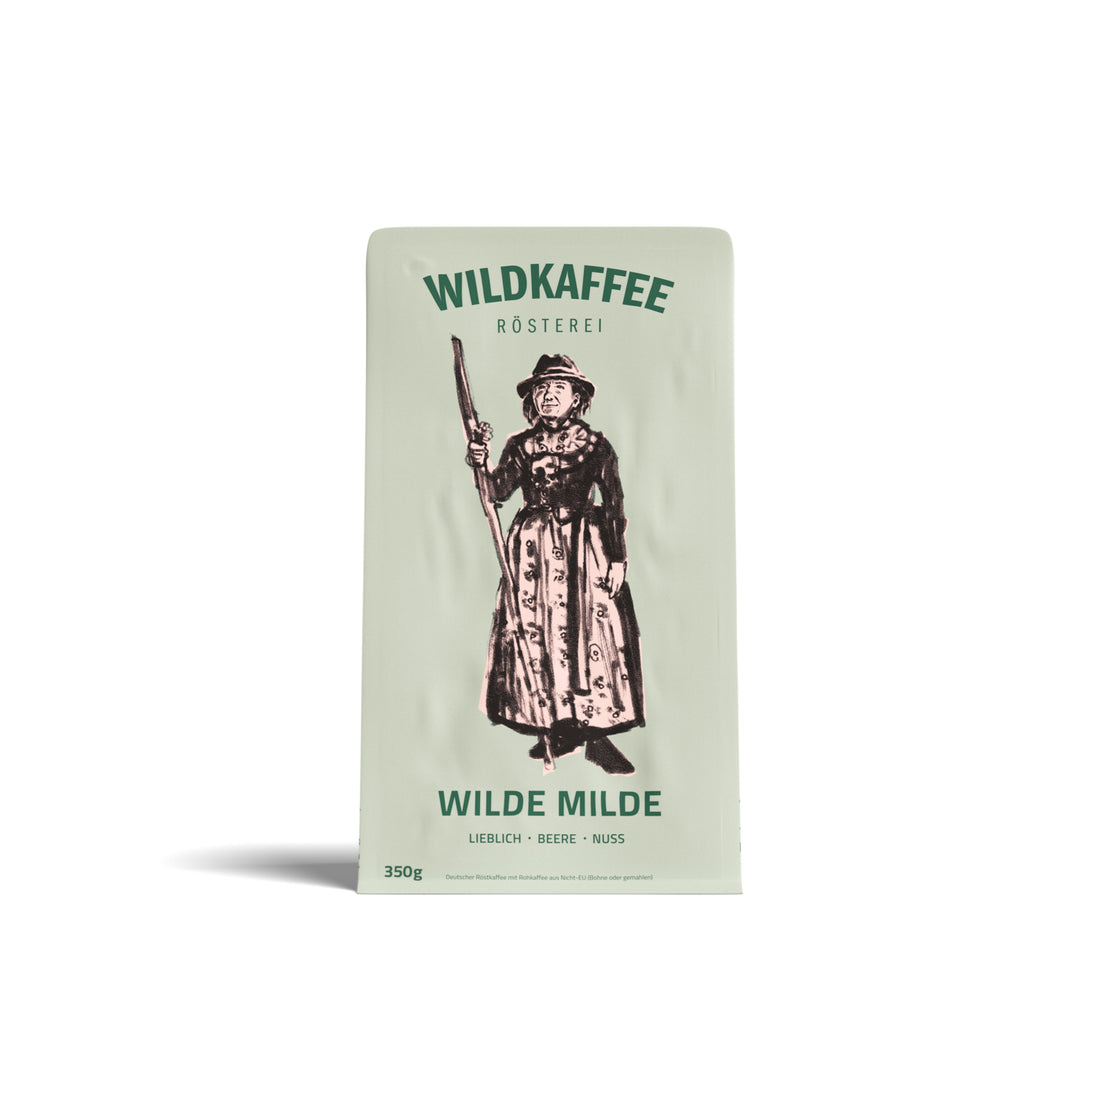 Wilde-Milde-Kaffee-mittlere-Roestung-Wildkaffee-Roesterei